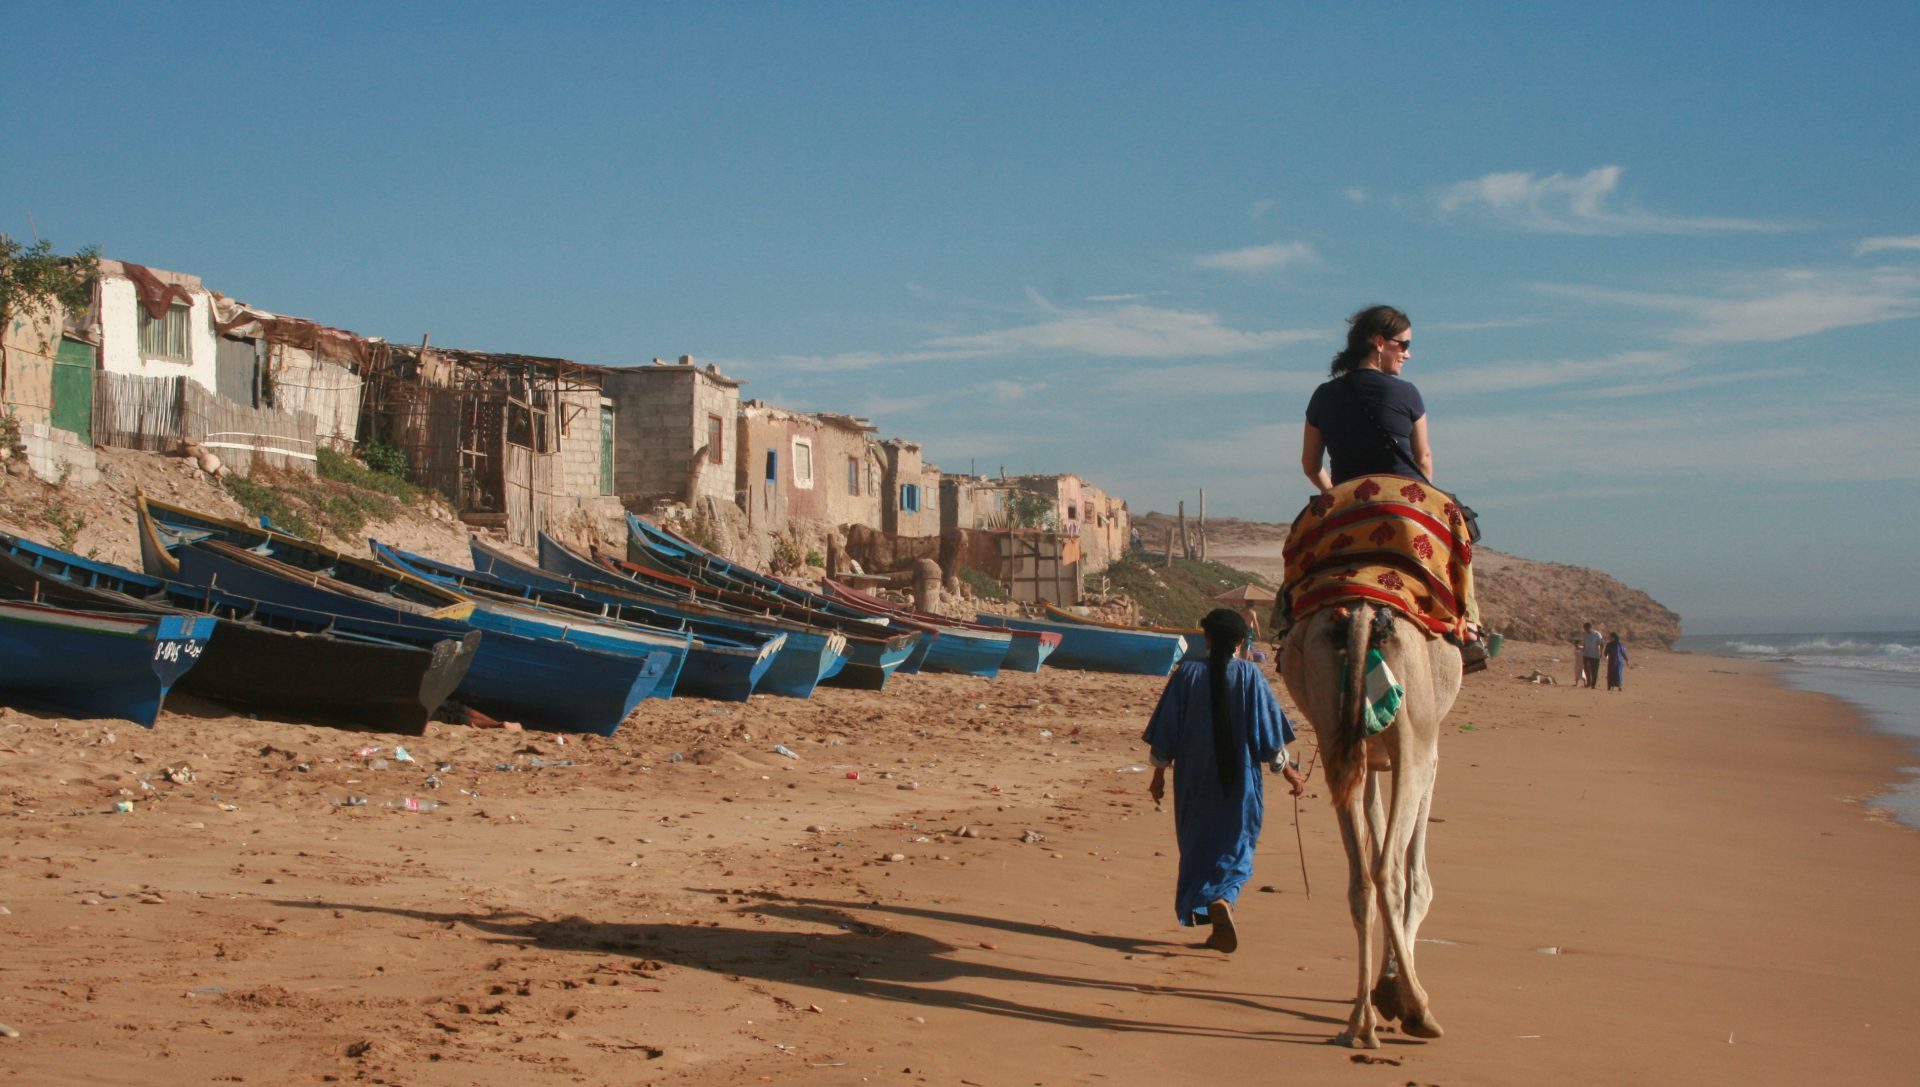 https://www.intrepidtravel.com/adventures/wp-content/uploads/2017/03/morocco_agadir_camel-ride.jpg